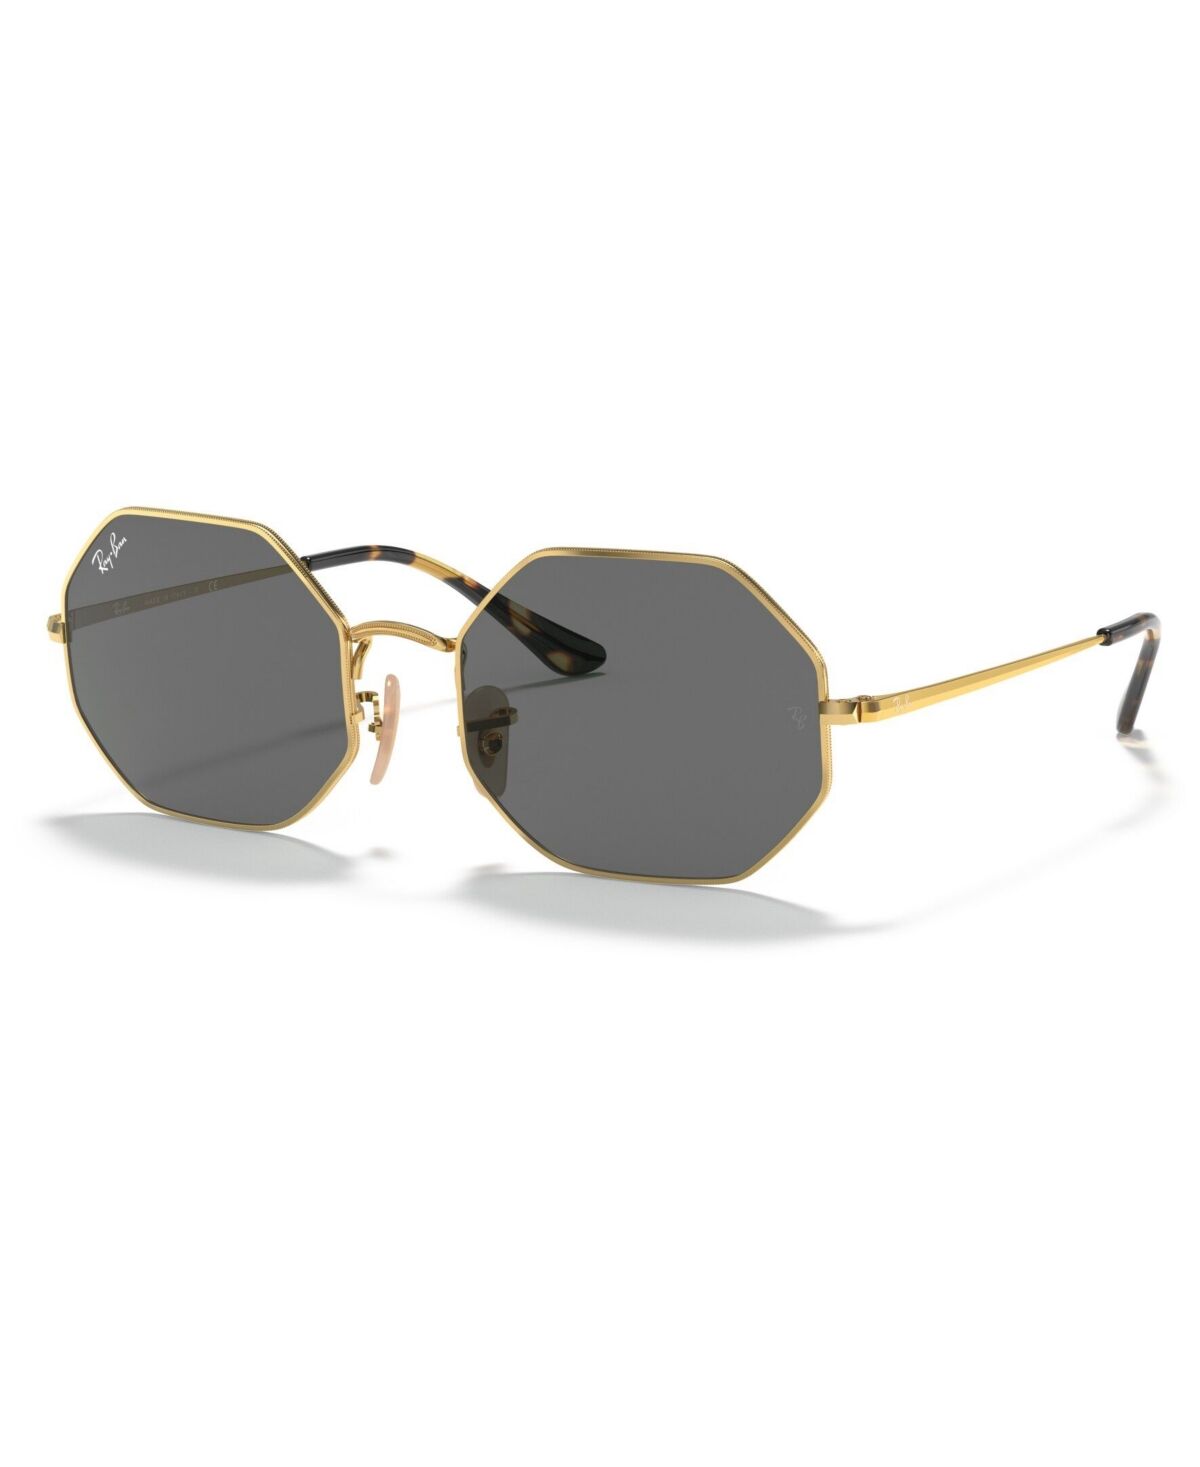 Ray-Ban Unisex Sunglasses, RB1972 - GOLD/DARK GREY